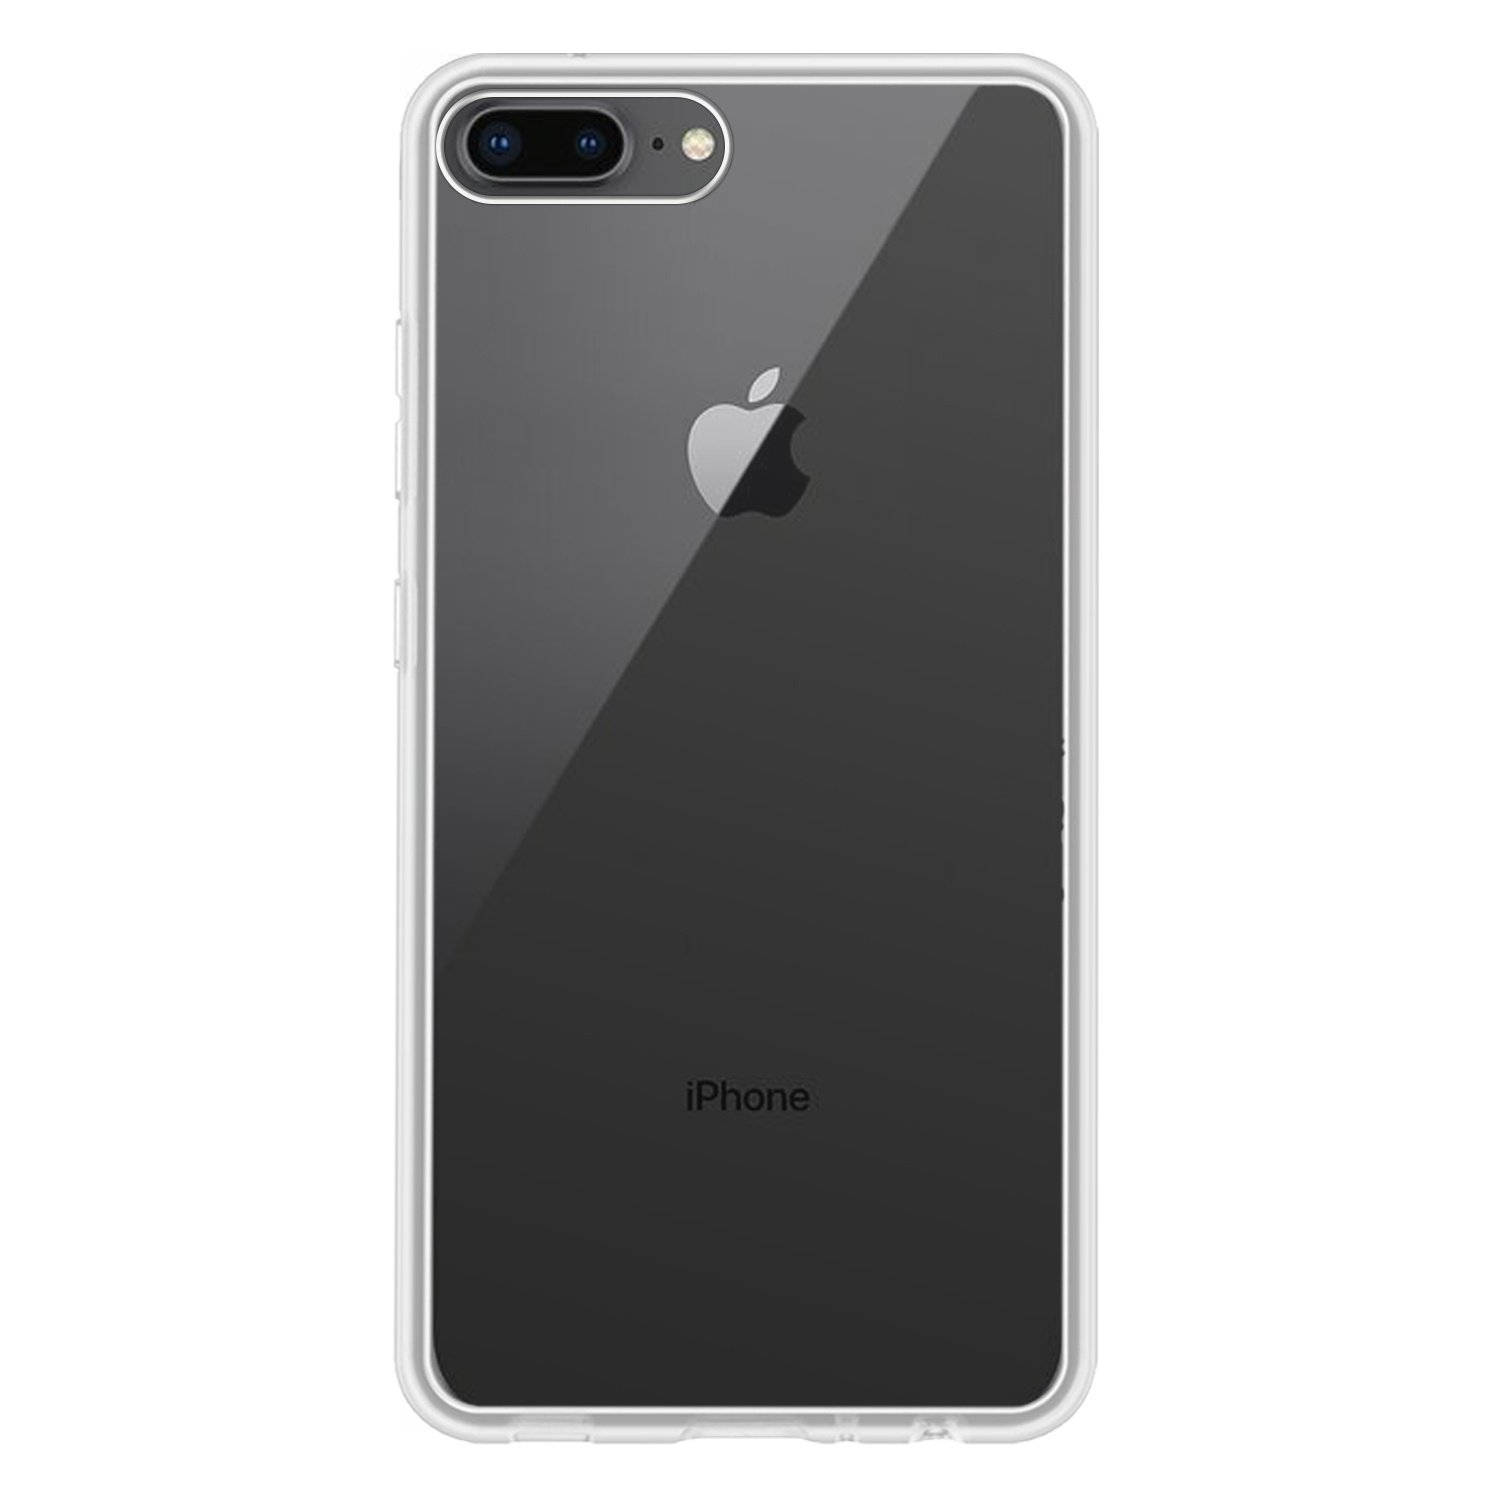 Hoes Geschikt voor iPhone 7 Plus Hoesje Siliconen Back Cover Case - Hoesje Geschikt voor iPhone 7 Plus Hoes Cover Hoesje - Transparant